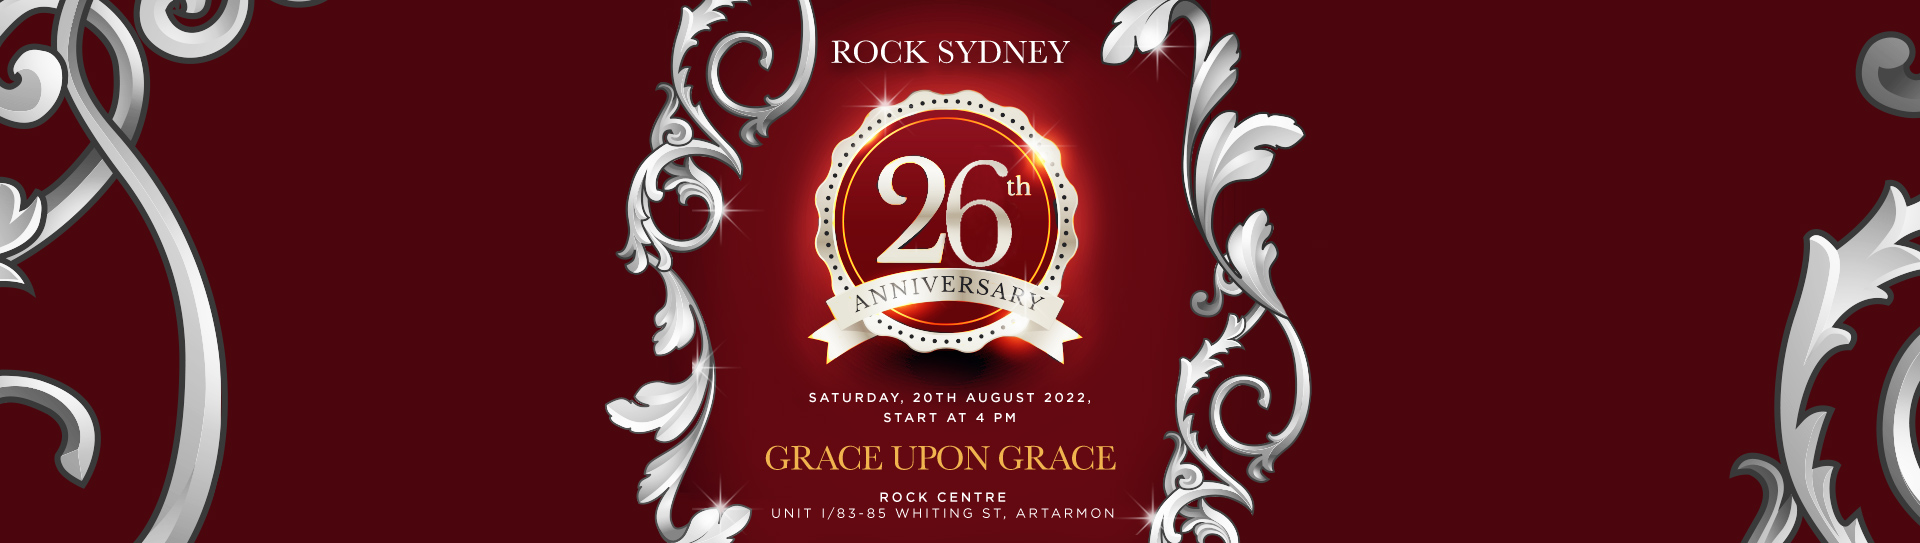 ROCKSydney 26th Anniversary